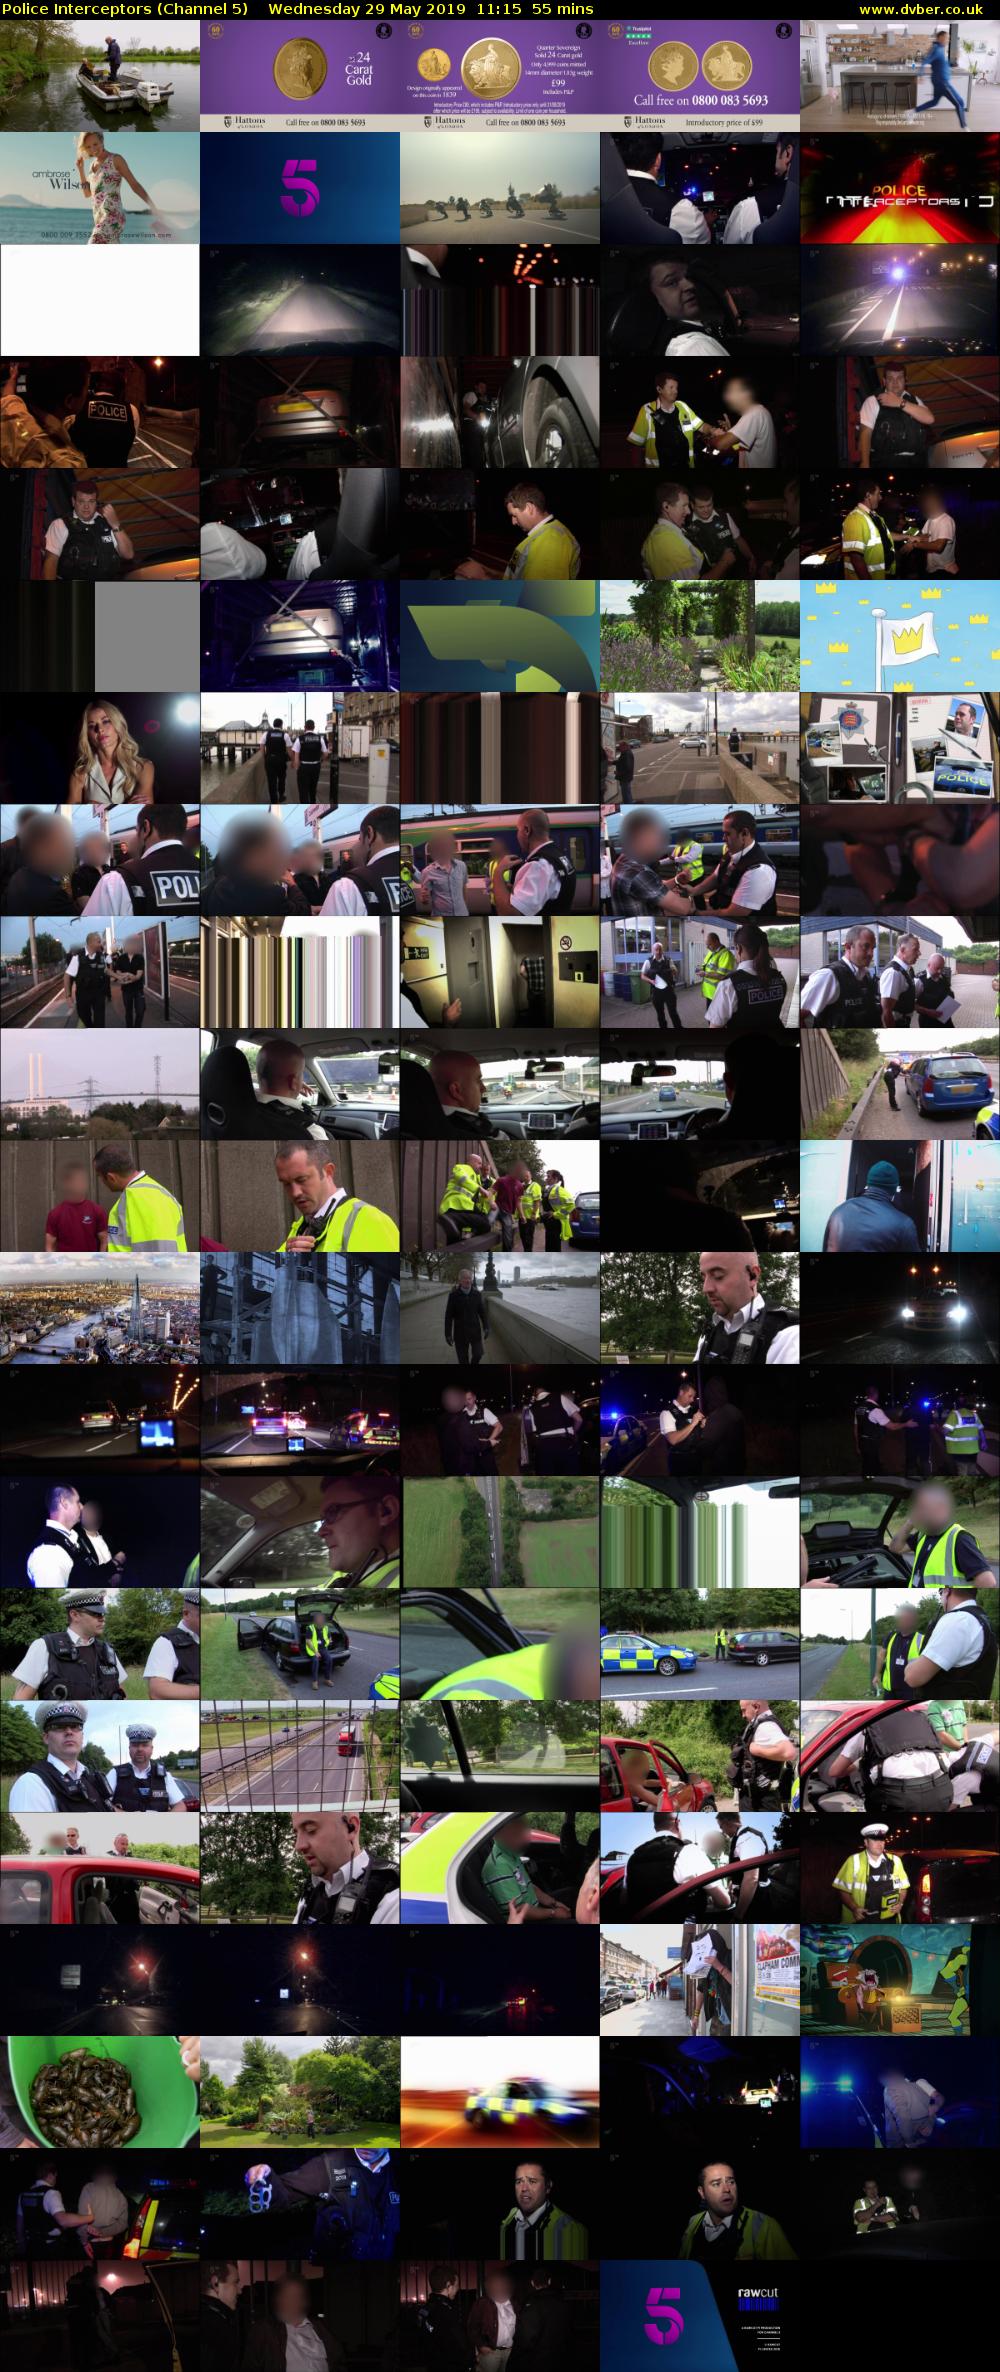 Police Interceptors (Channel 5) Wednesday 29 May 2019 11:15 - 12:10